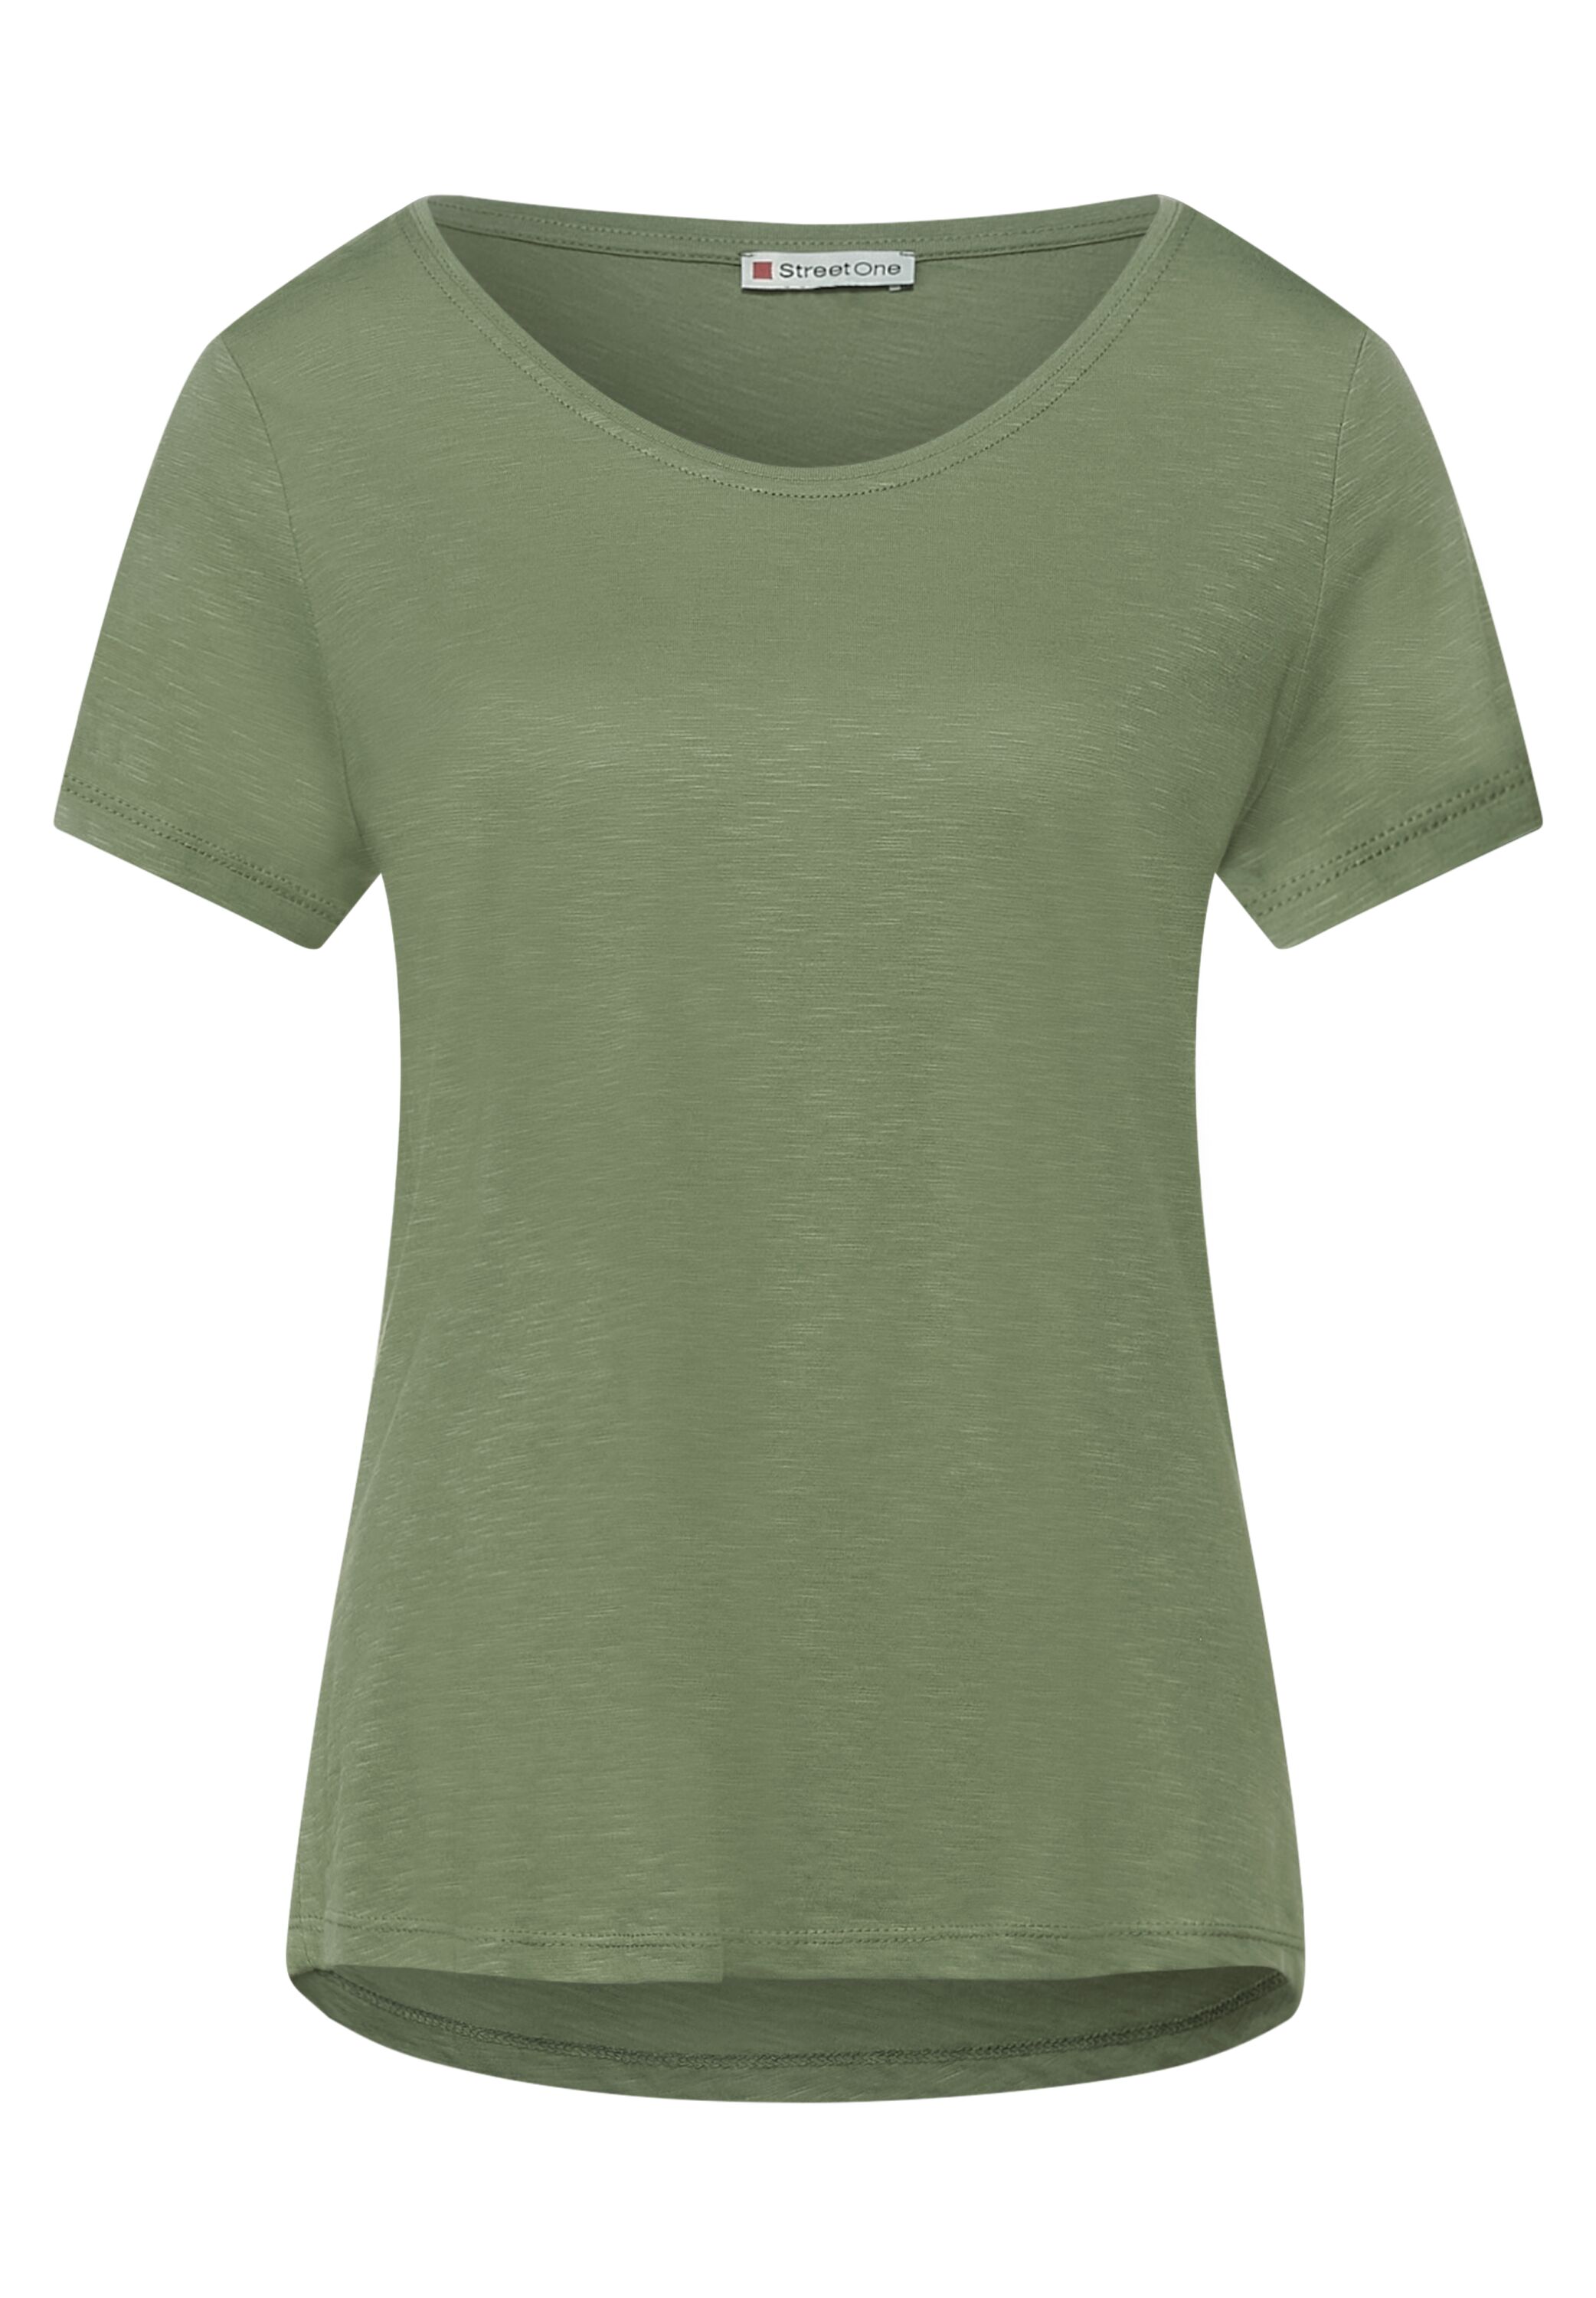 Street One T-Shirt New Gerda in Fern Green im SALE reduziert A317569-13348  - CONCEPT Mode | Shirtjacken